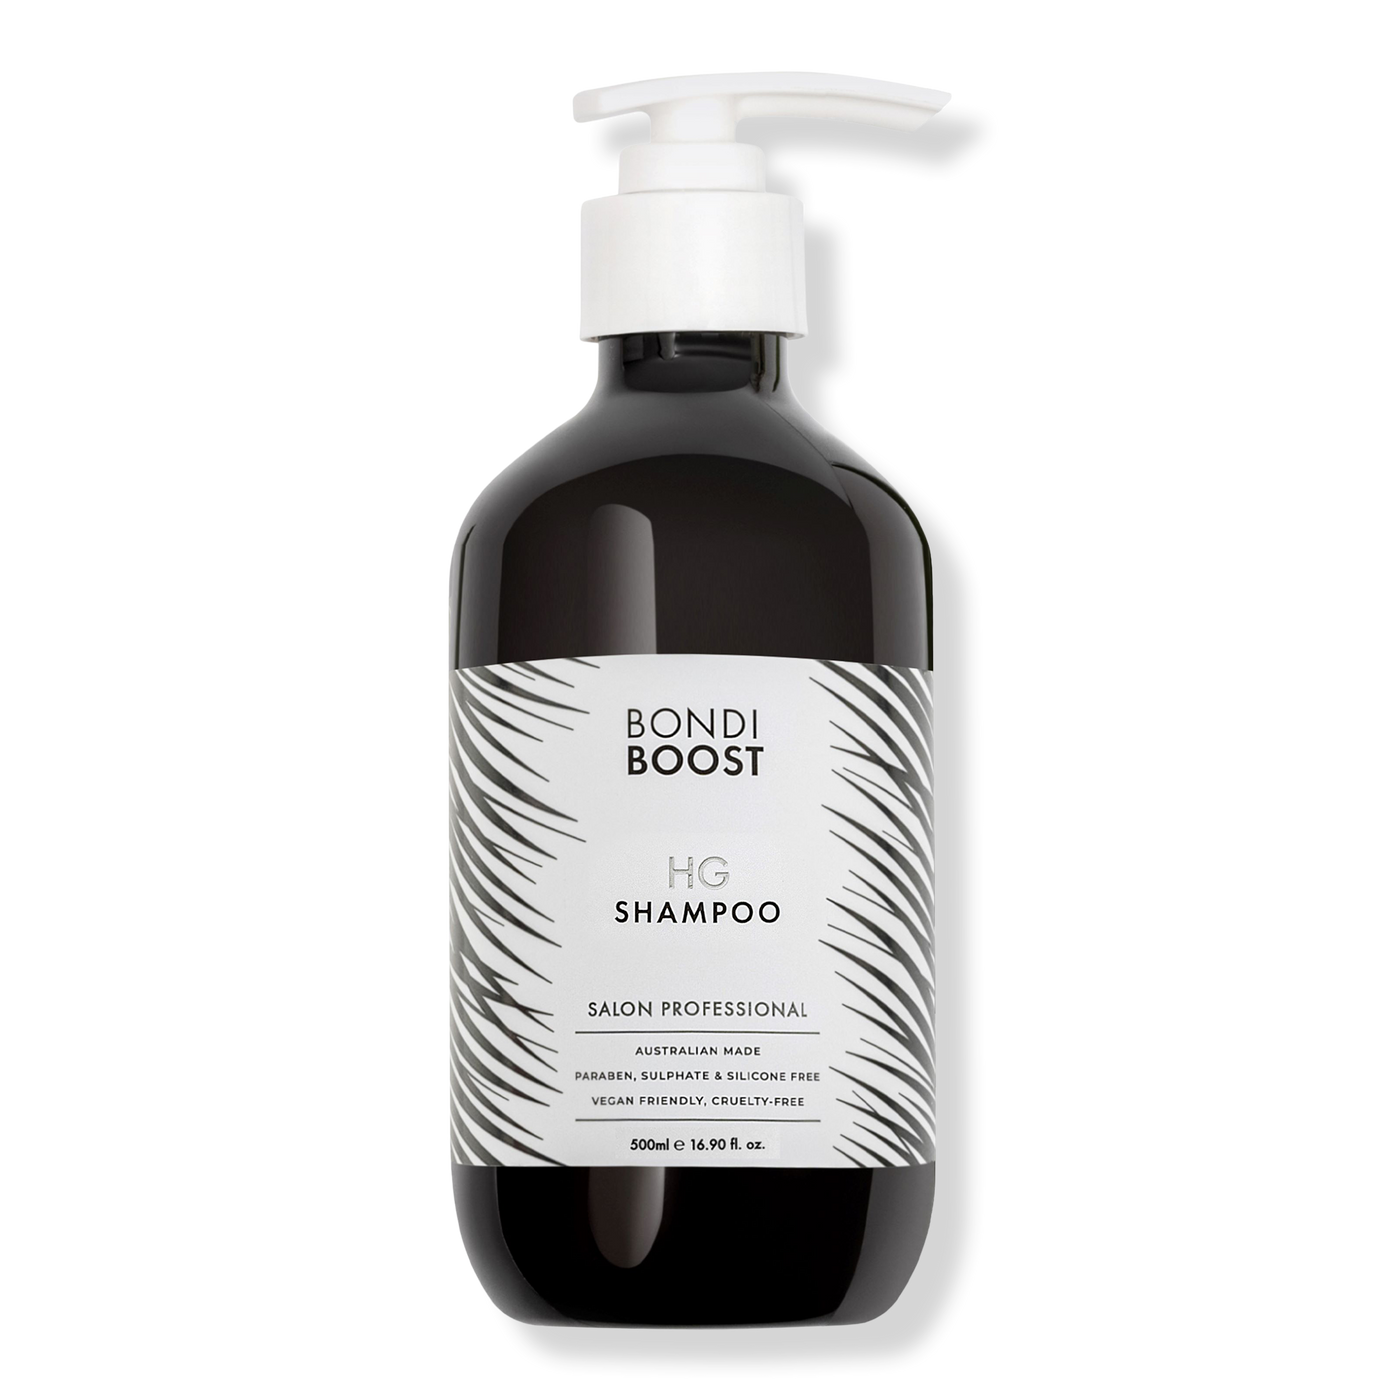 BondiBoost Hair Growth Shampoo - 1 litre